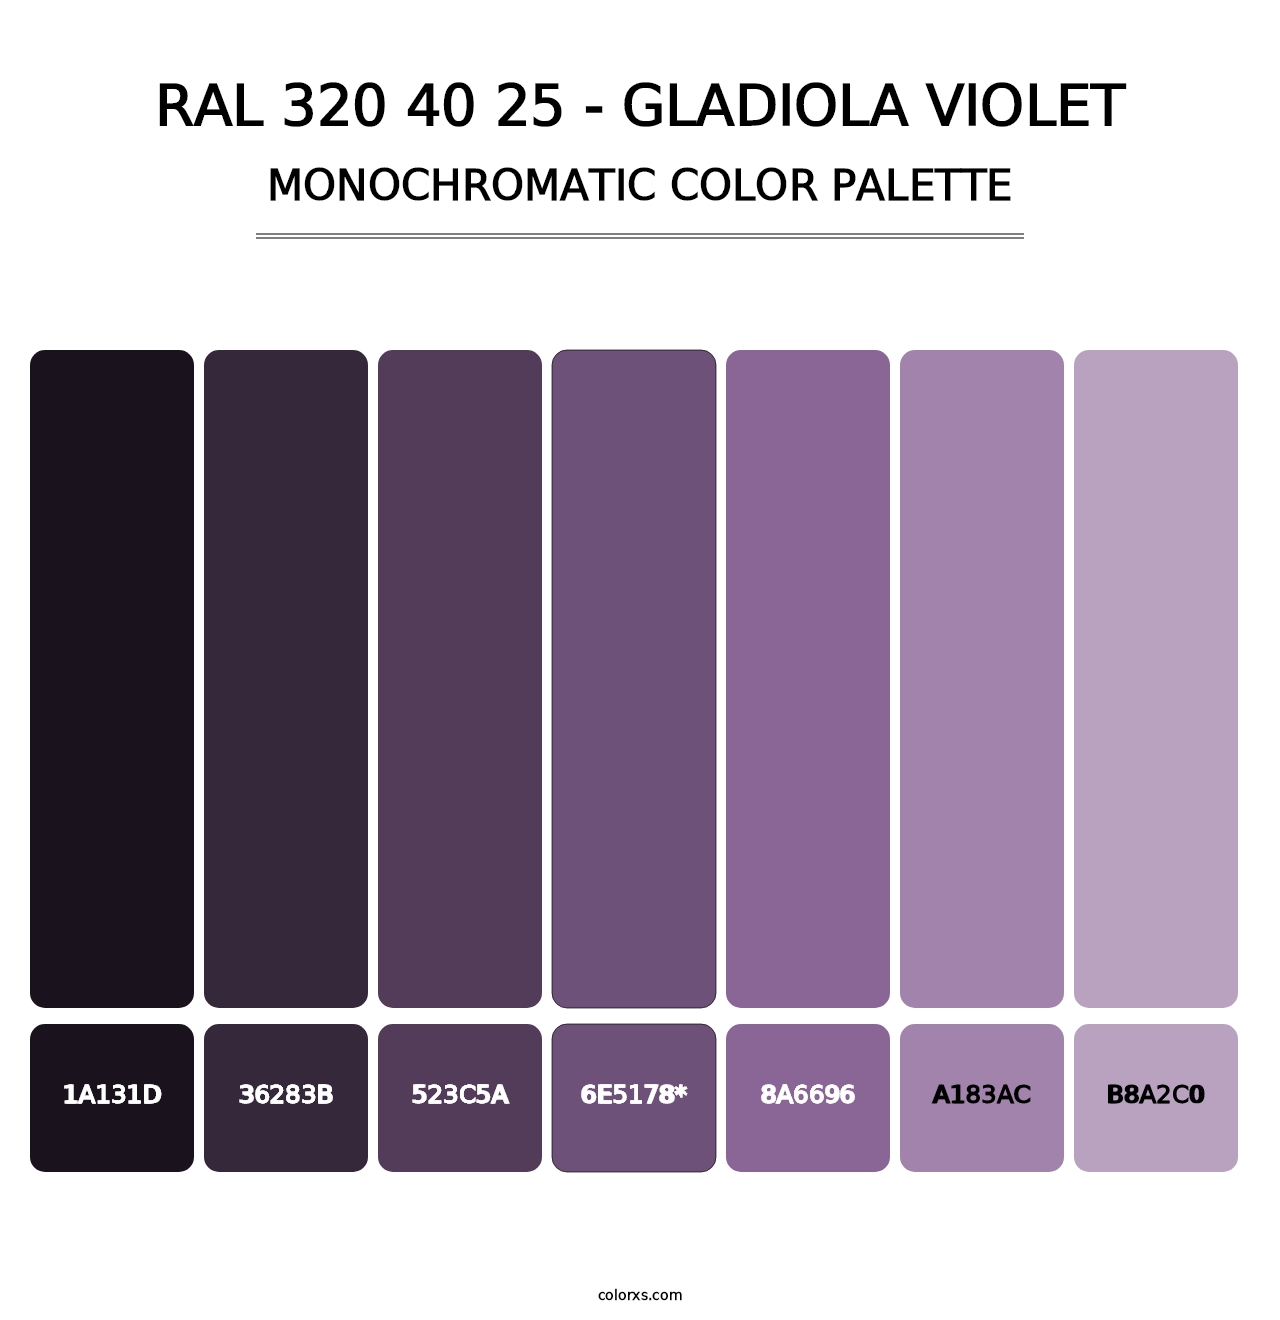 RAL 320 40 25 - Gladiola Violet - Monochromatic Color Palette